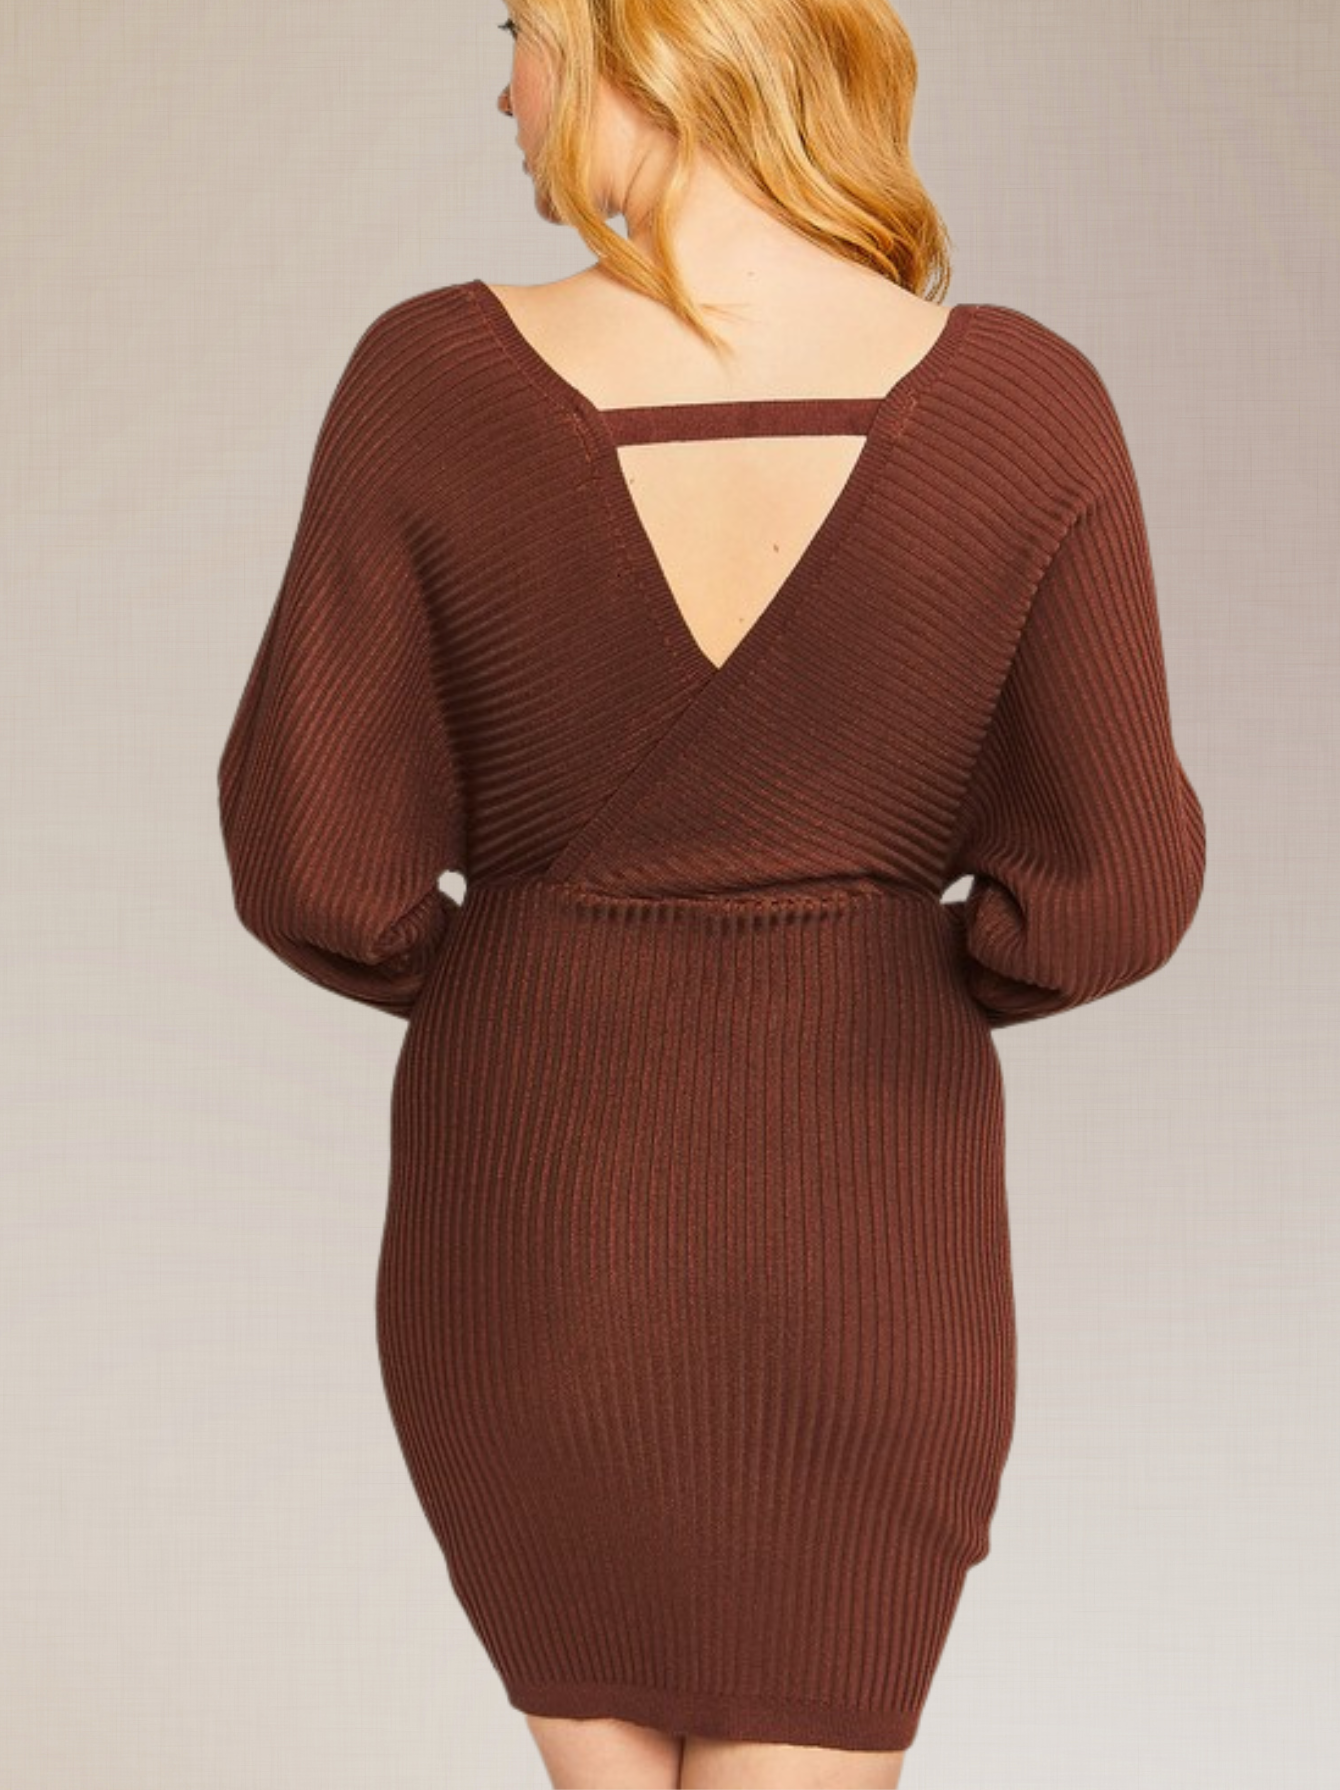 Talk To Me Nice Brown Sweater Dress